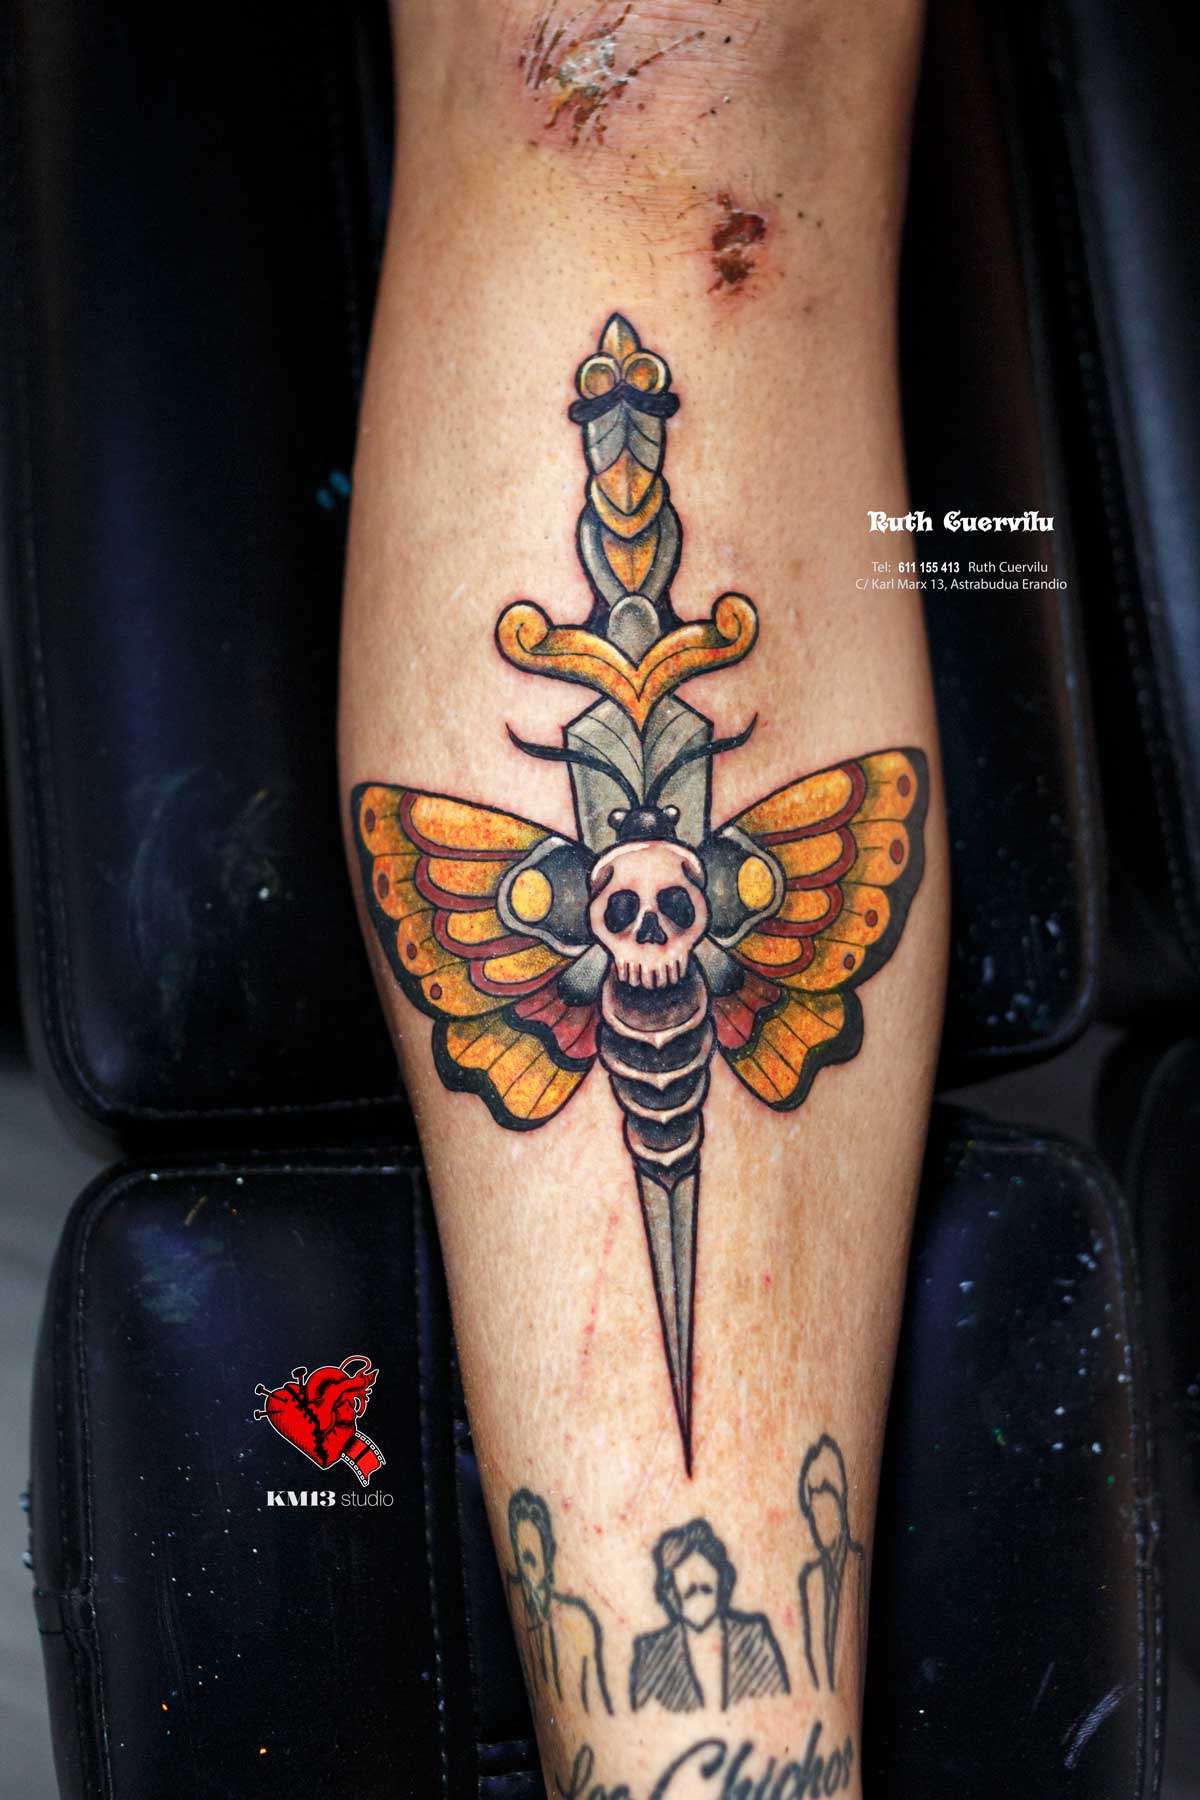 Tatuaje Polilla Espada a Color - Ruth Cuervilu Tattoo - KM13 Studio - estudio de tatuajes erandio astrabudua bilbao bizkaia